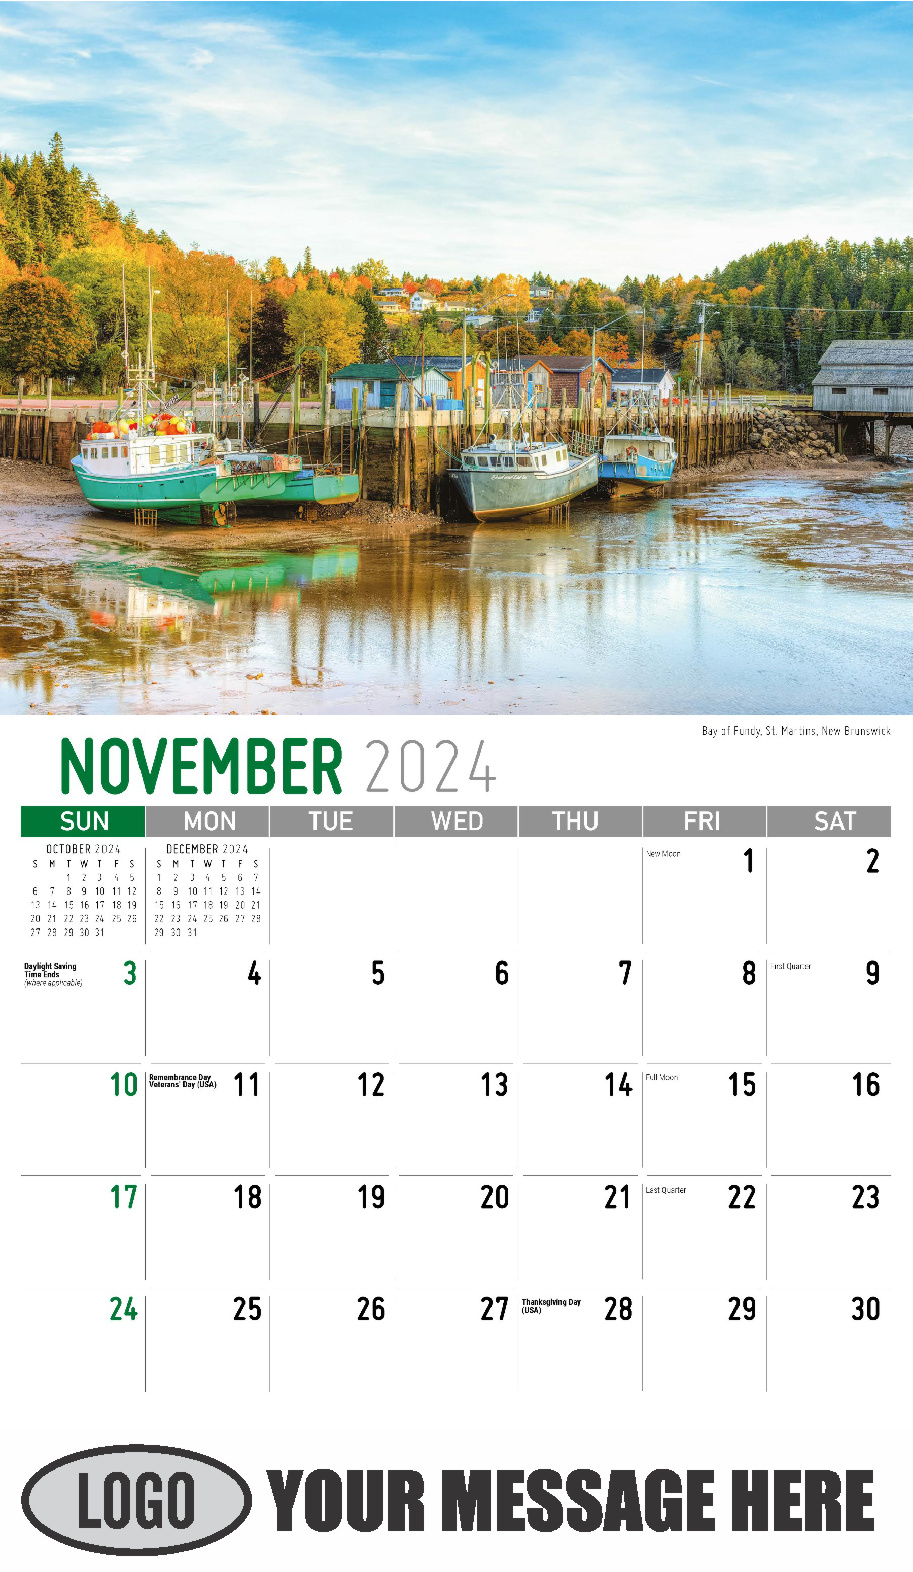 Atlantic Canada Scenic 2024 Business Promotion Calendar - November